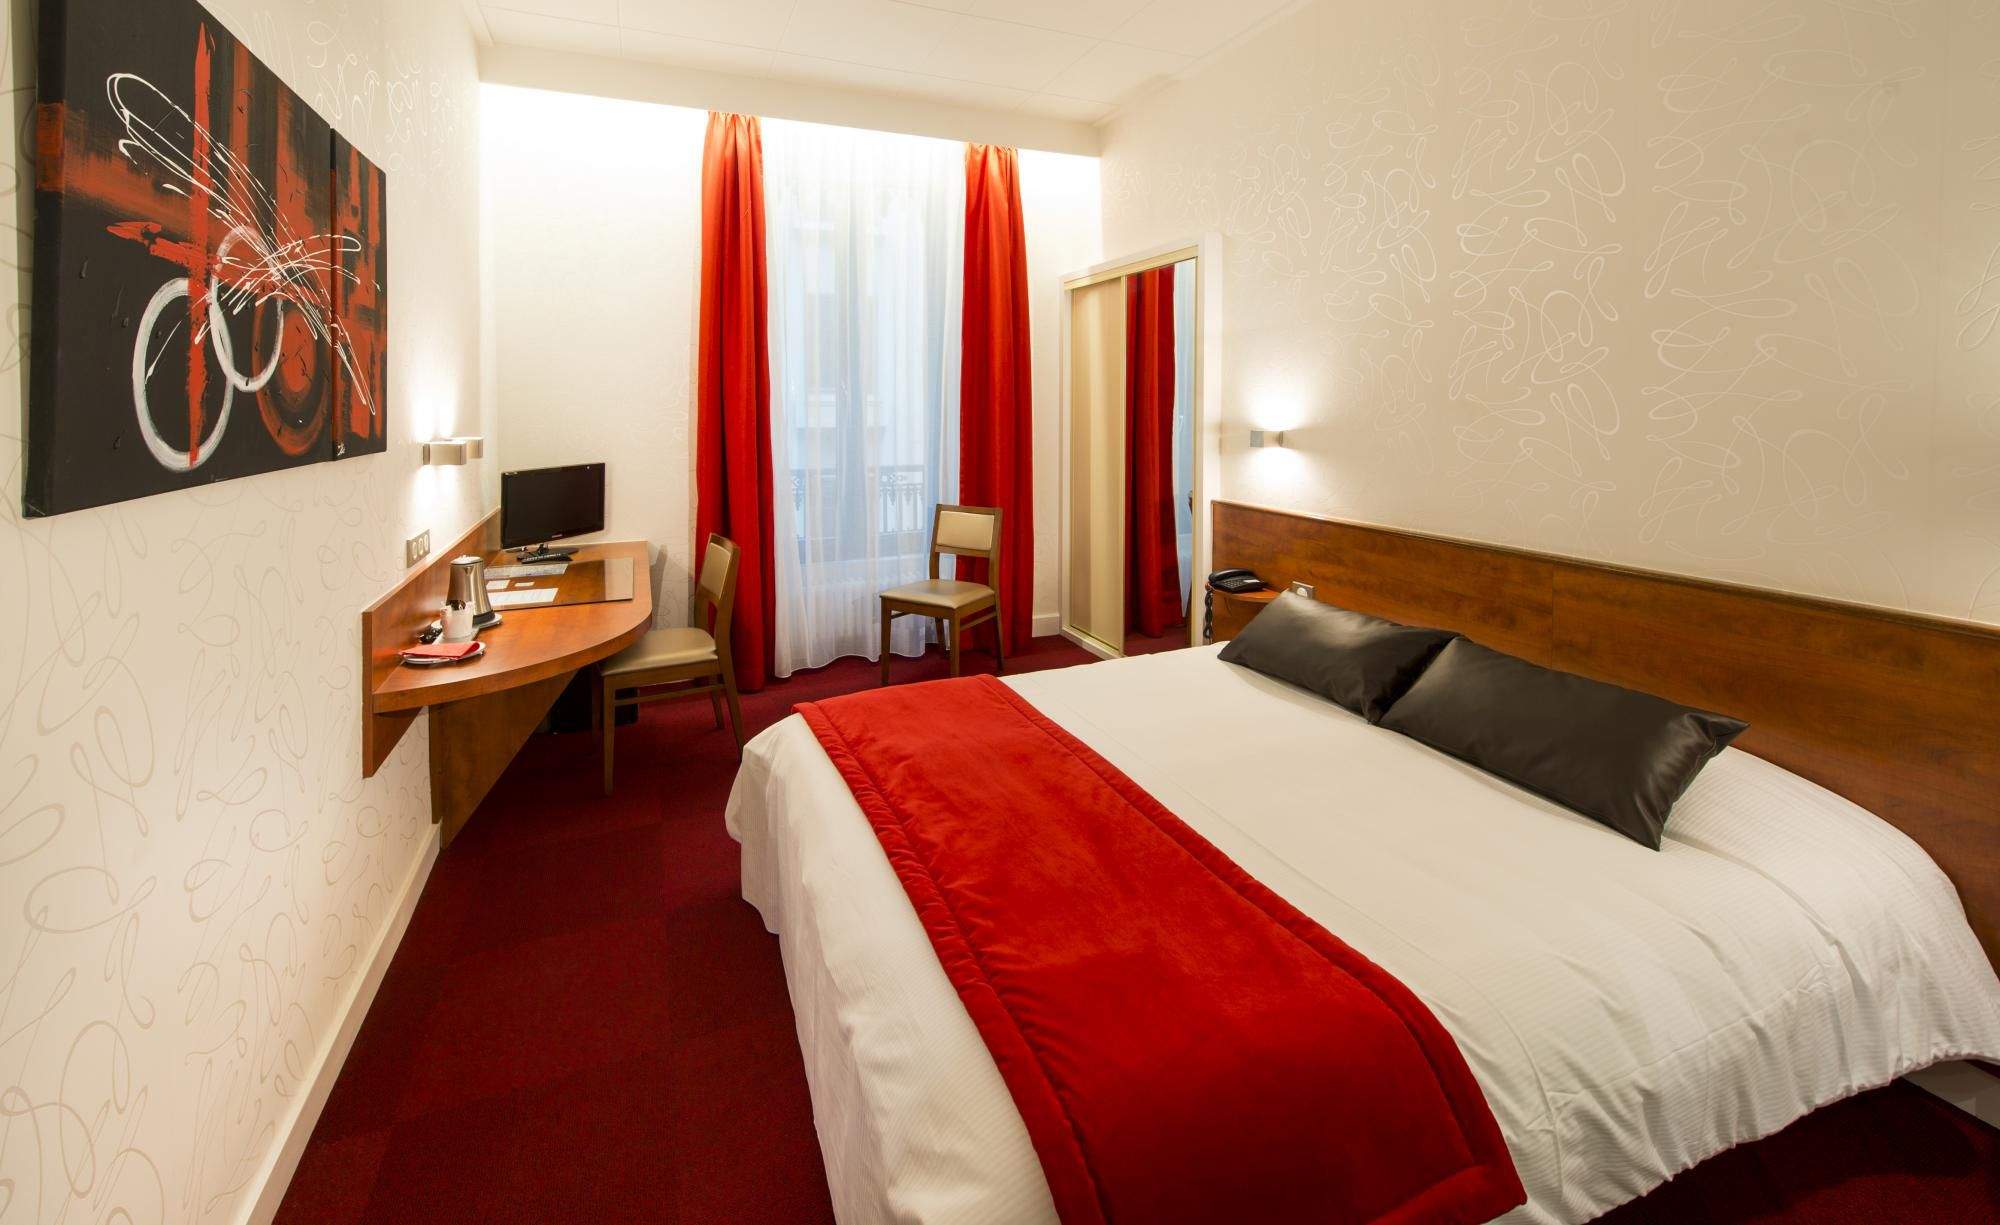 La Résidence - Hotel in Lyon, Place Bellecour - 3 stars